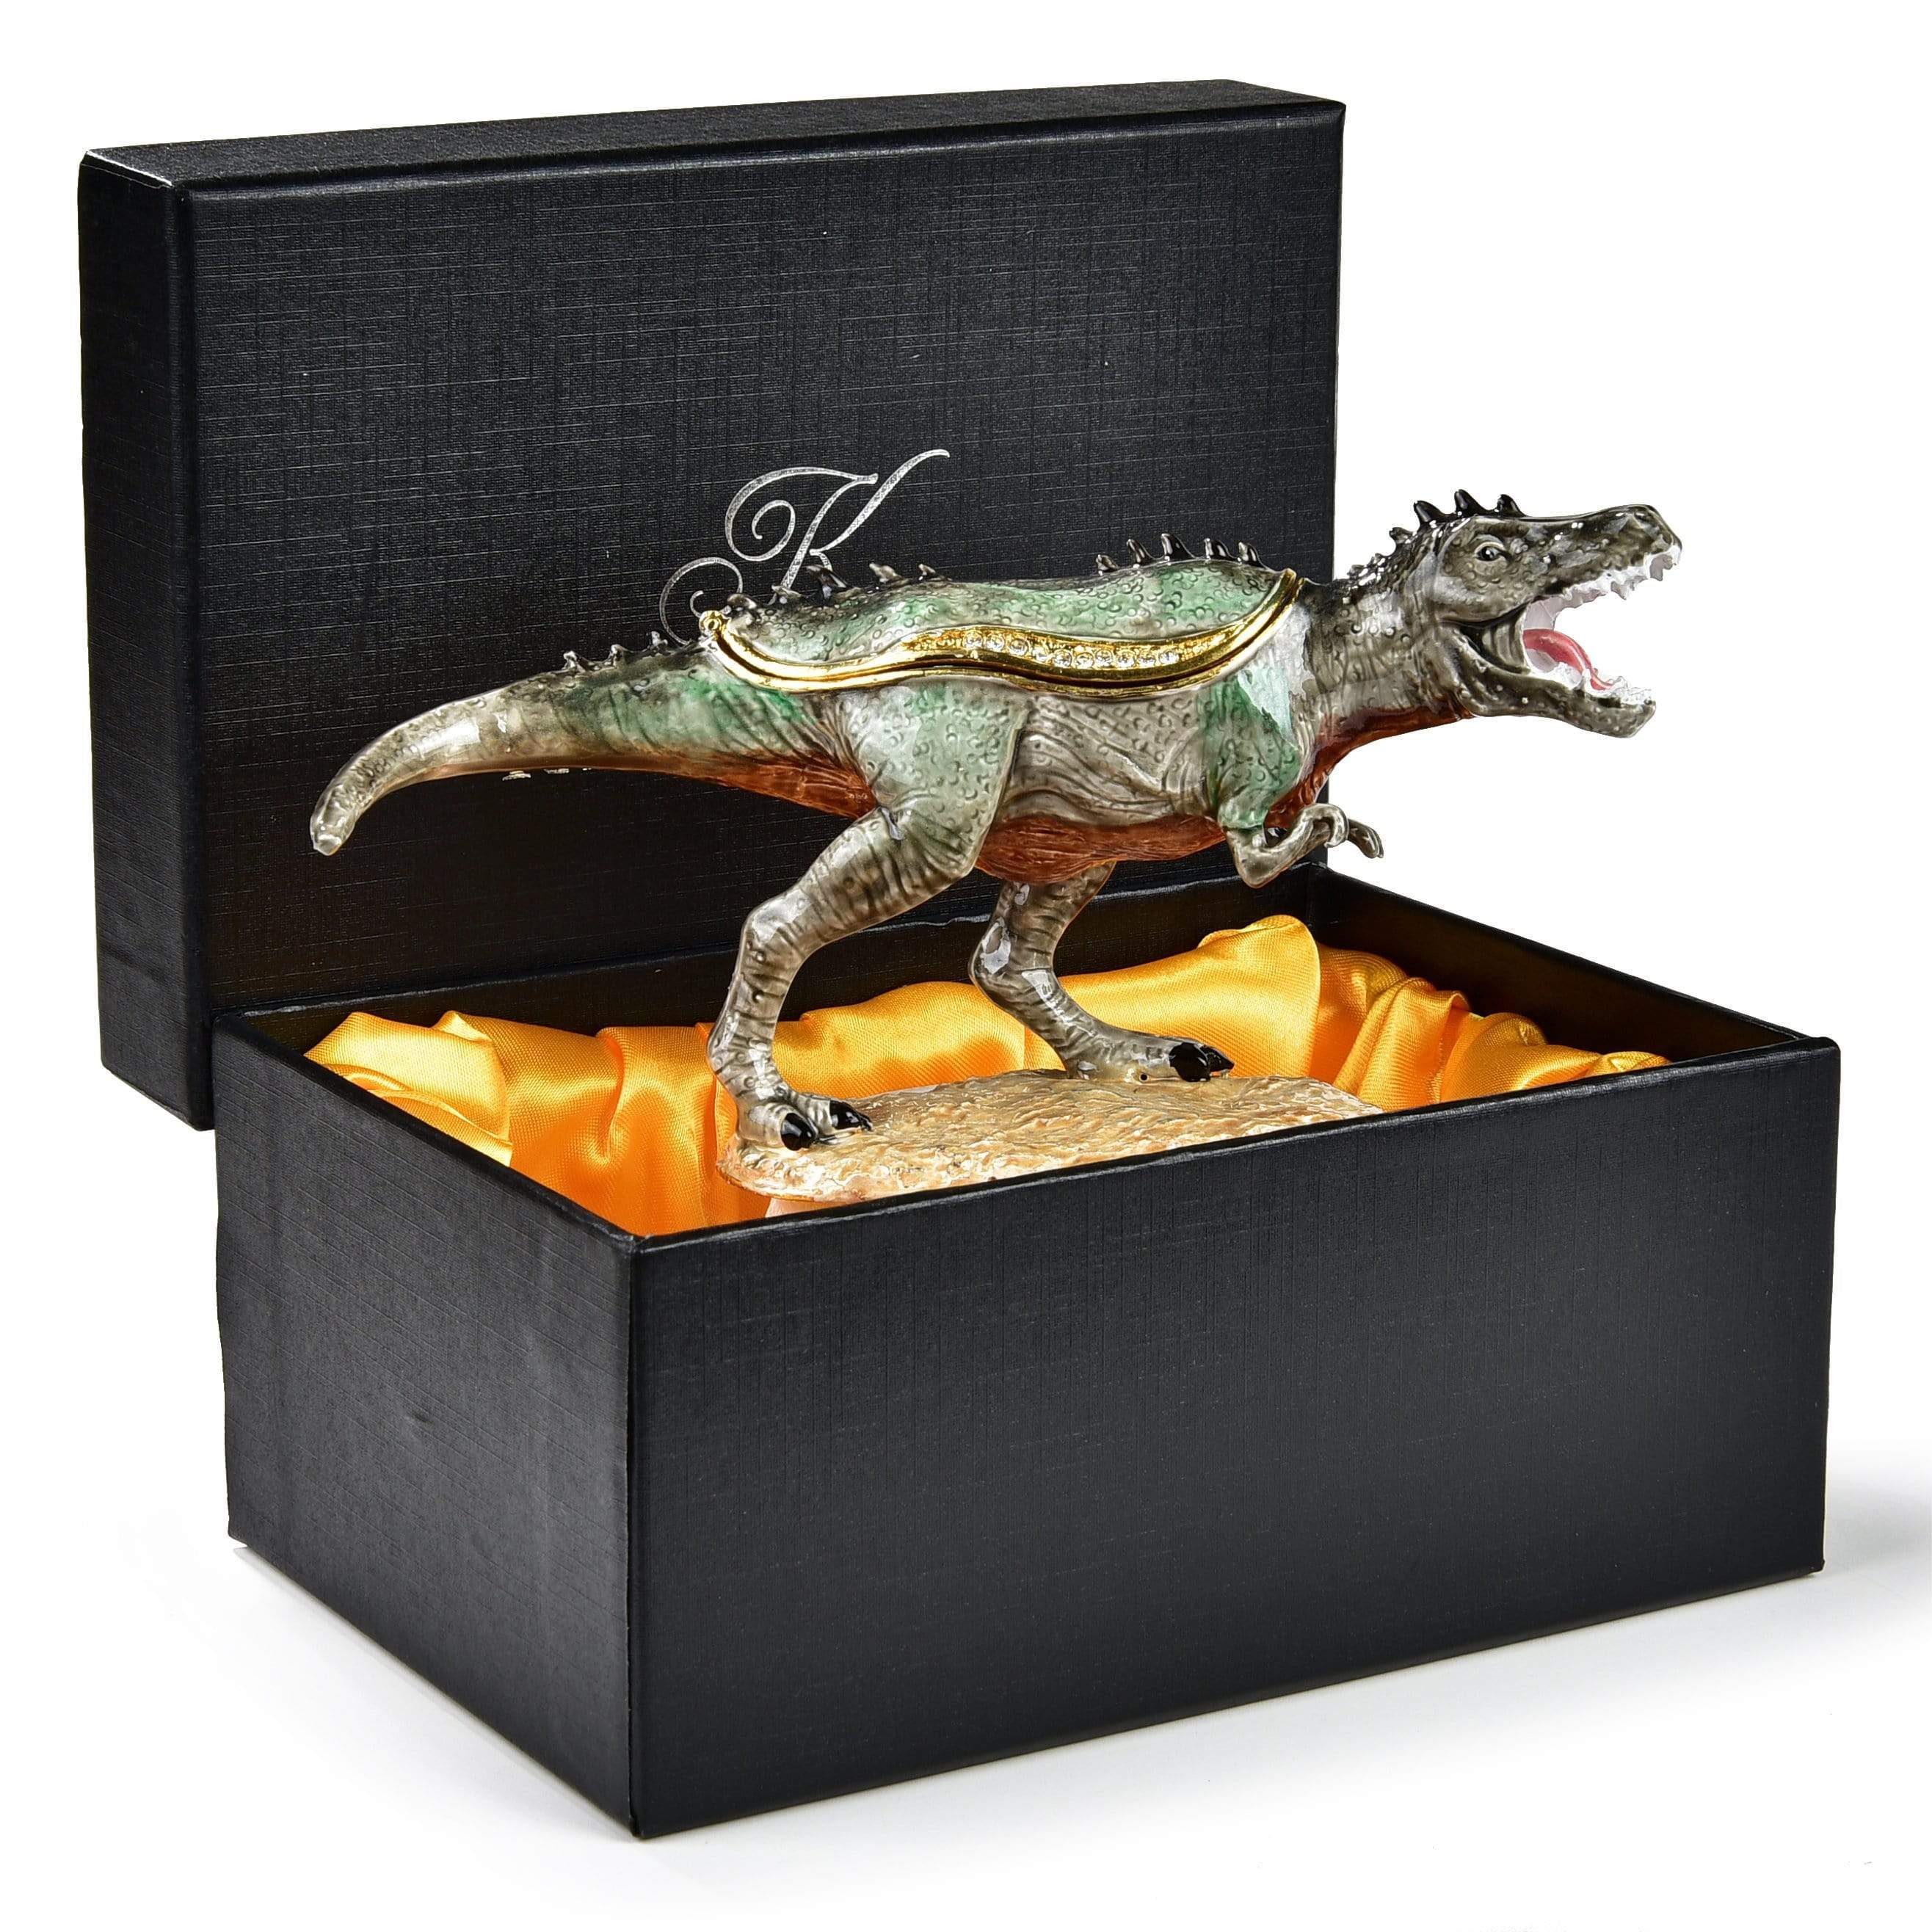 Kalifano Vanity Figurine T-Rex Figurine Keepsake Box made with Crystals SVA-054